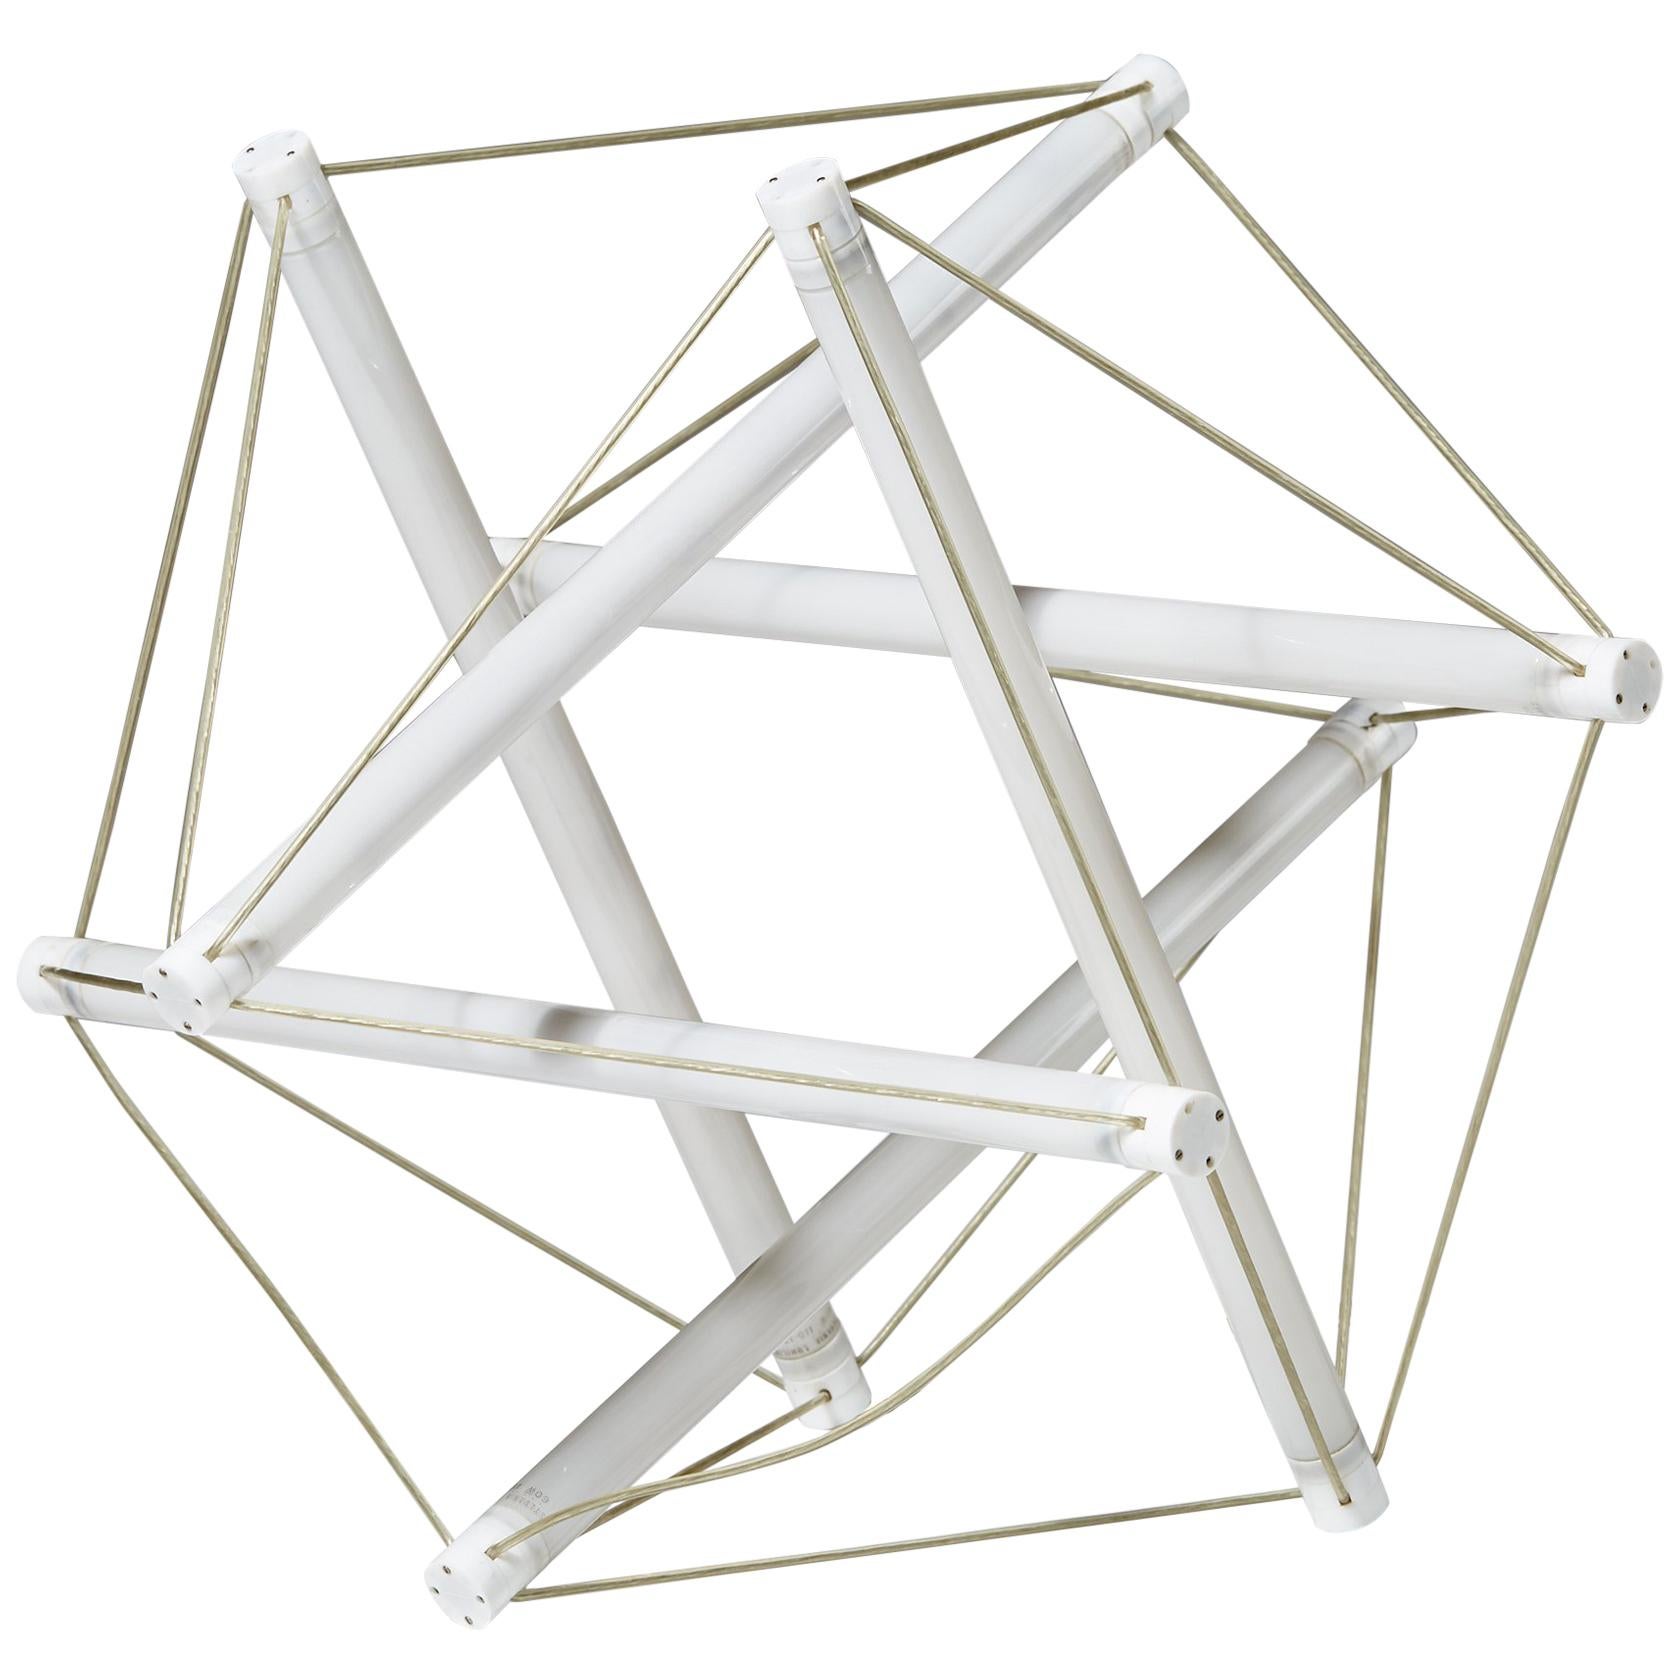 Lamp ‘Light Structure’ Designed by Ingo Maurer and Peter Hamburger for Design M